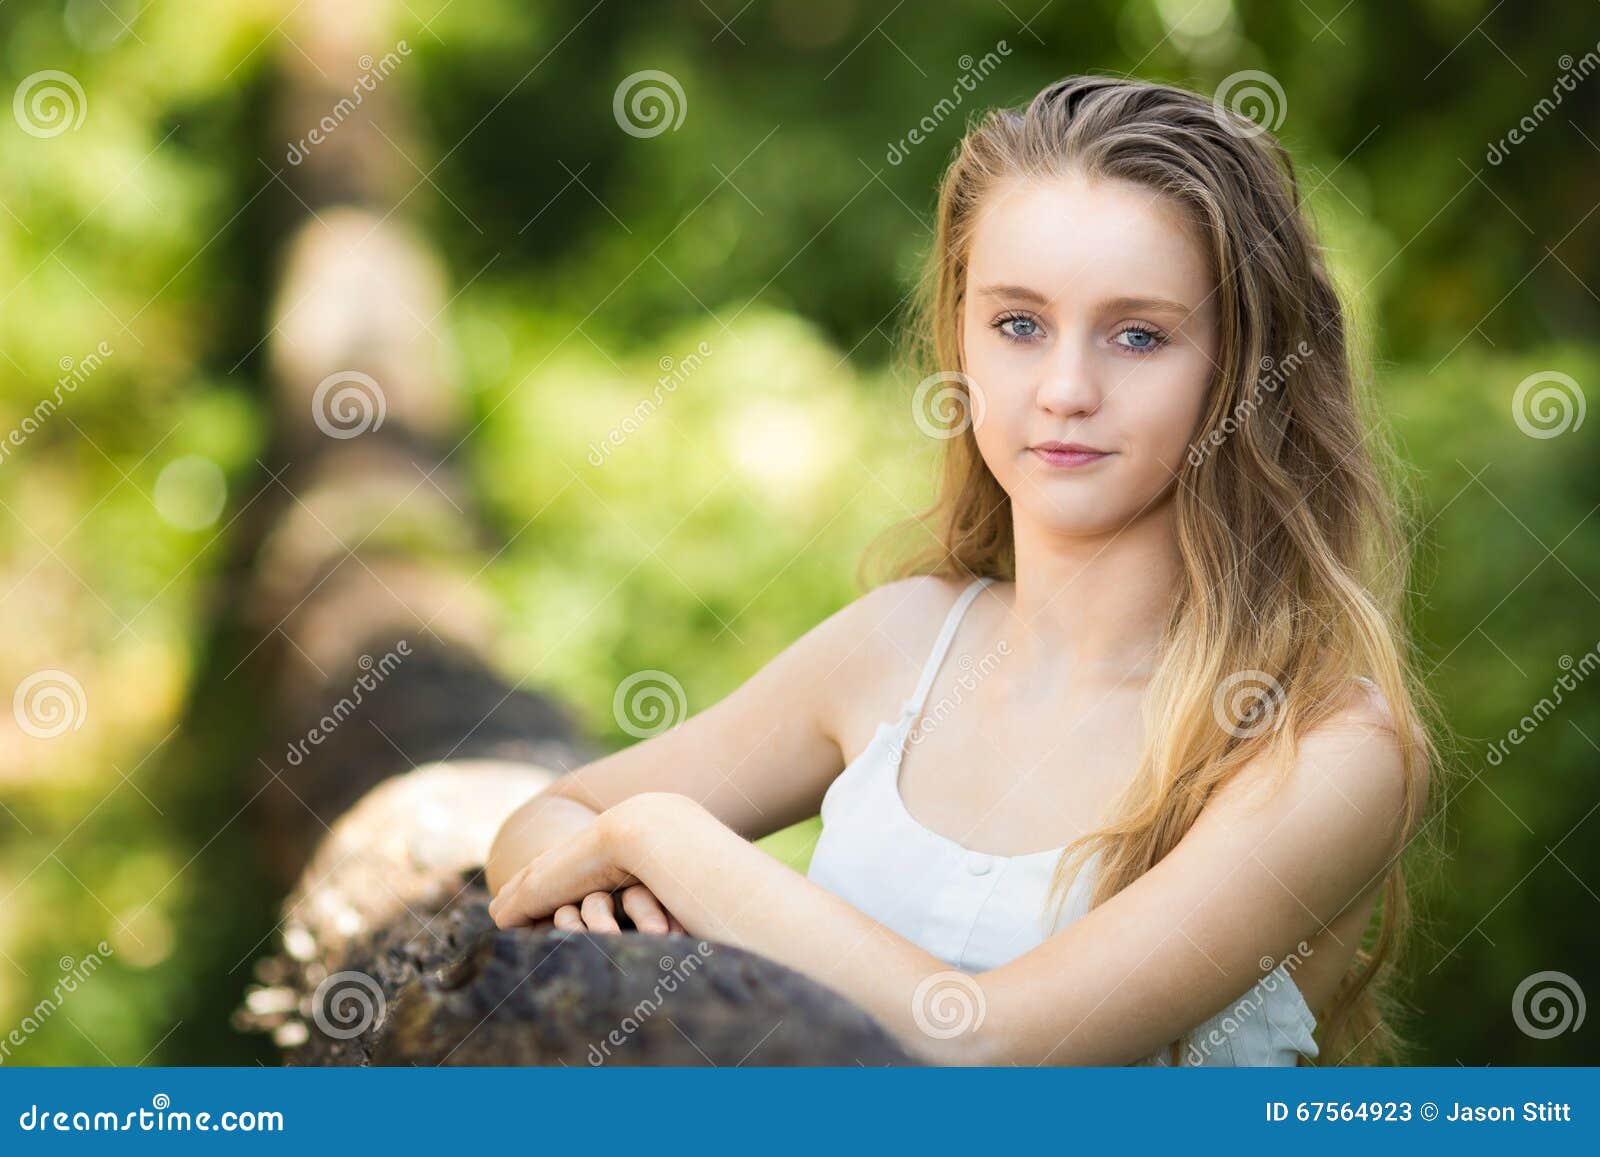 Blond Hair Teen Girl with Long Hair - wide 8